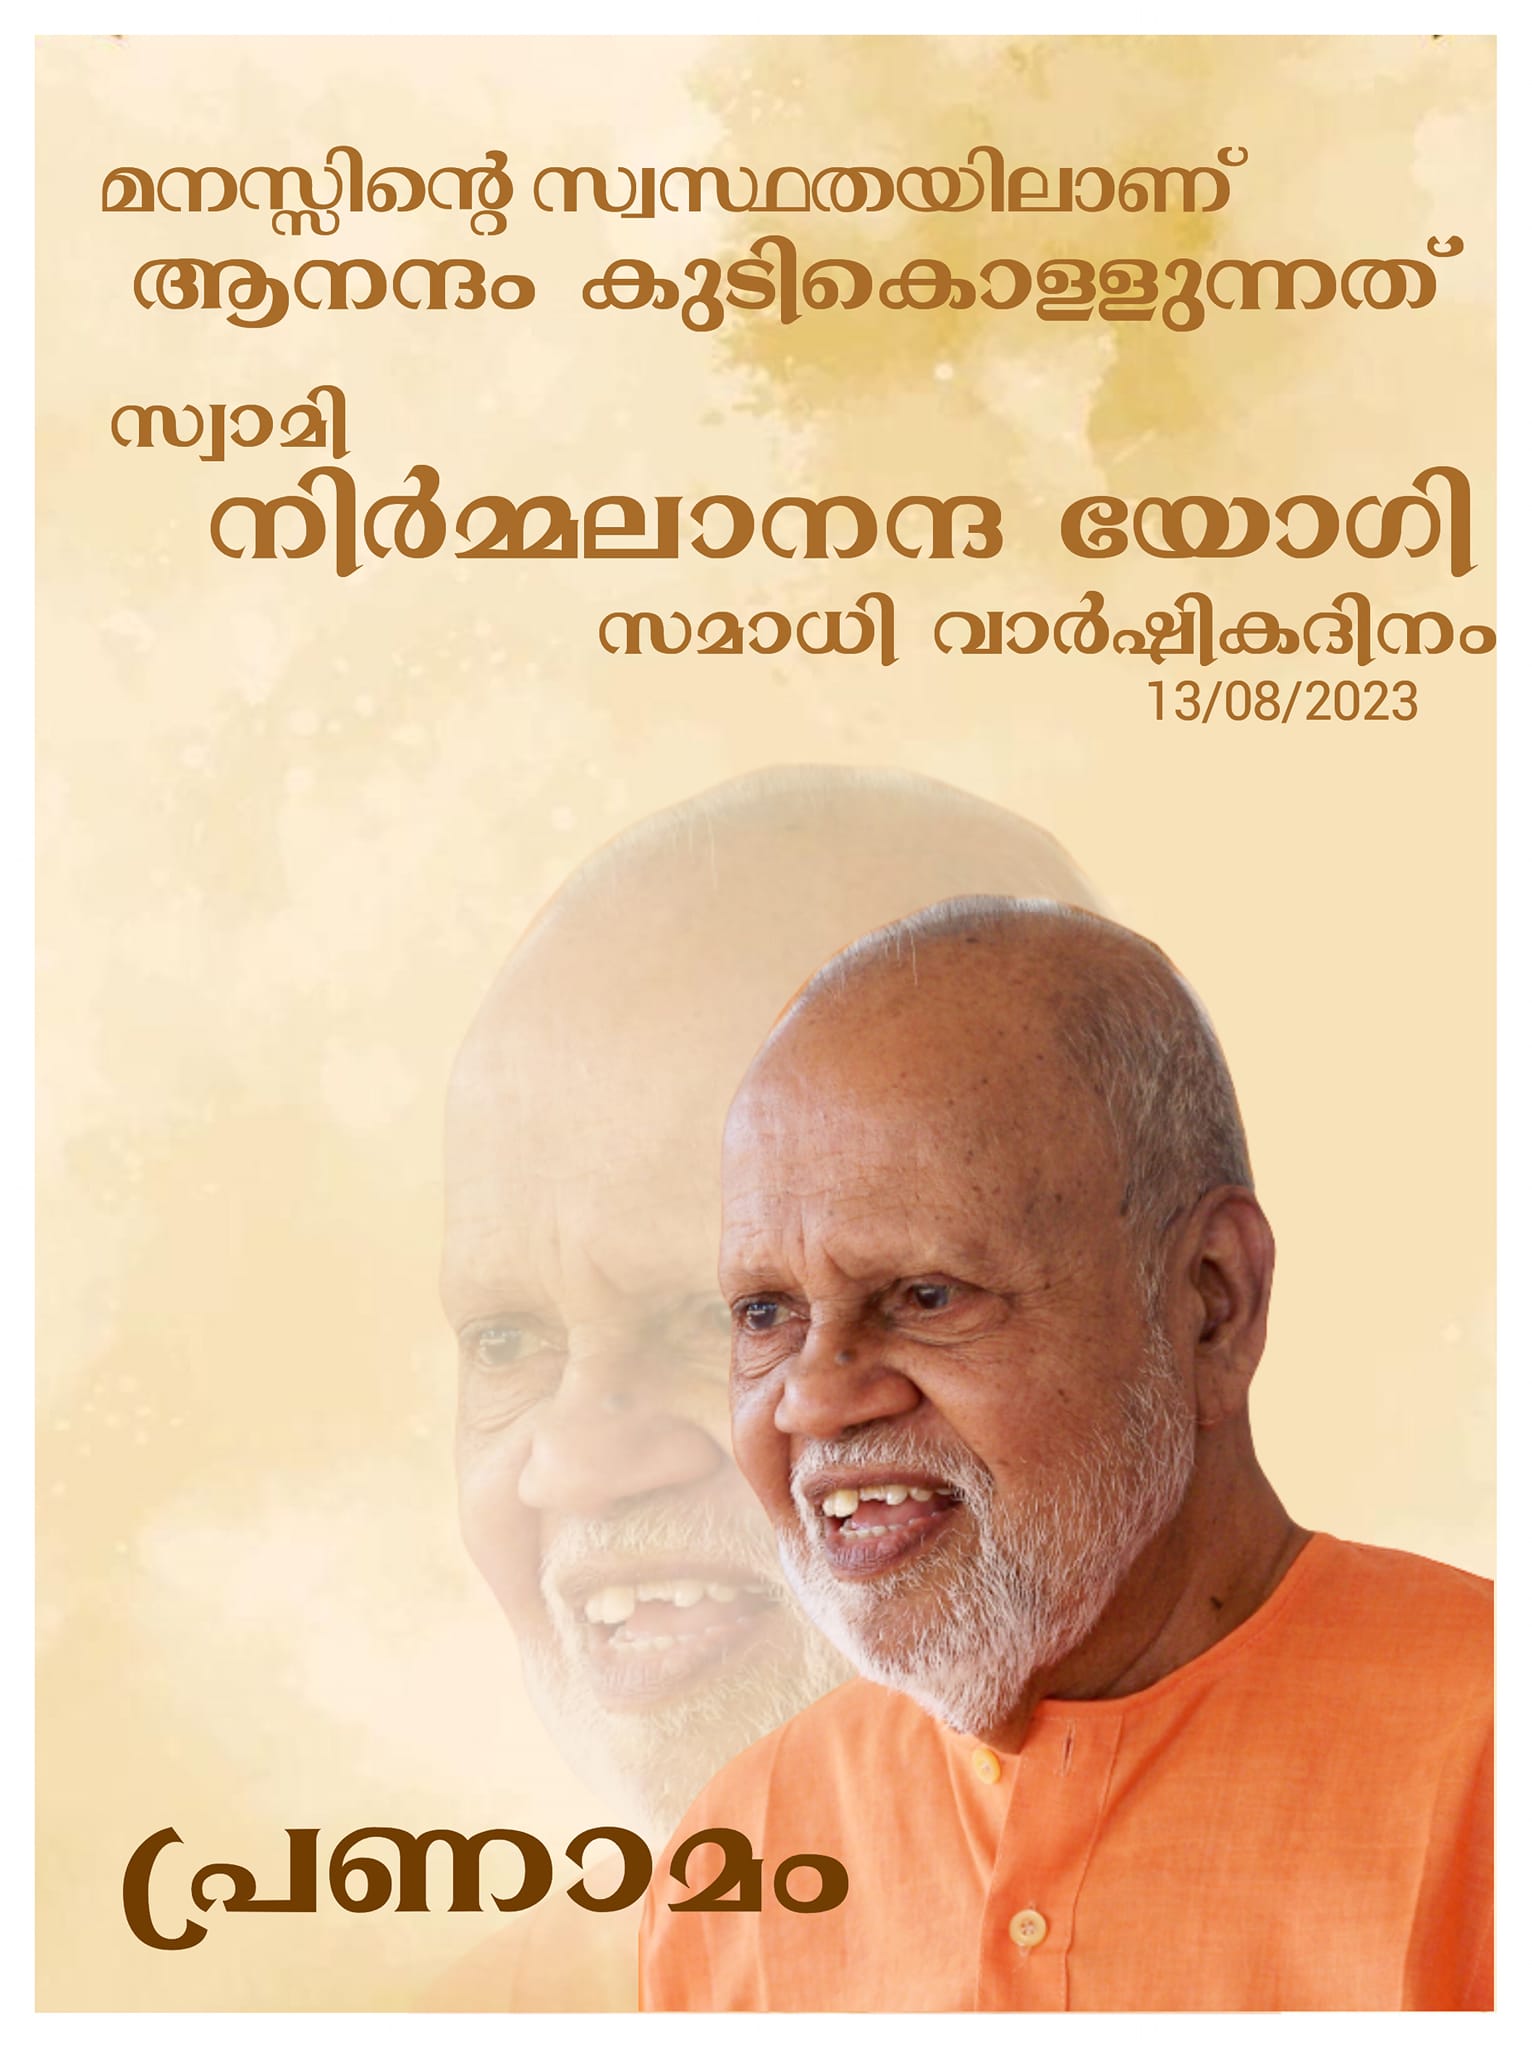 Commemoration on the Samadhi anniversary of Swami Nirmalananda Yogi